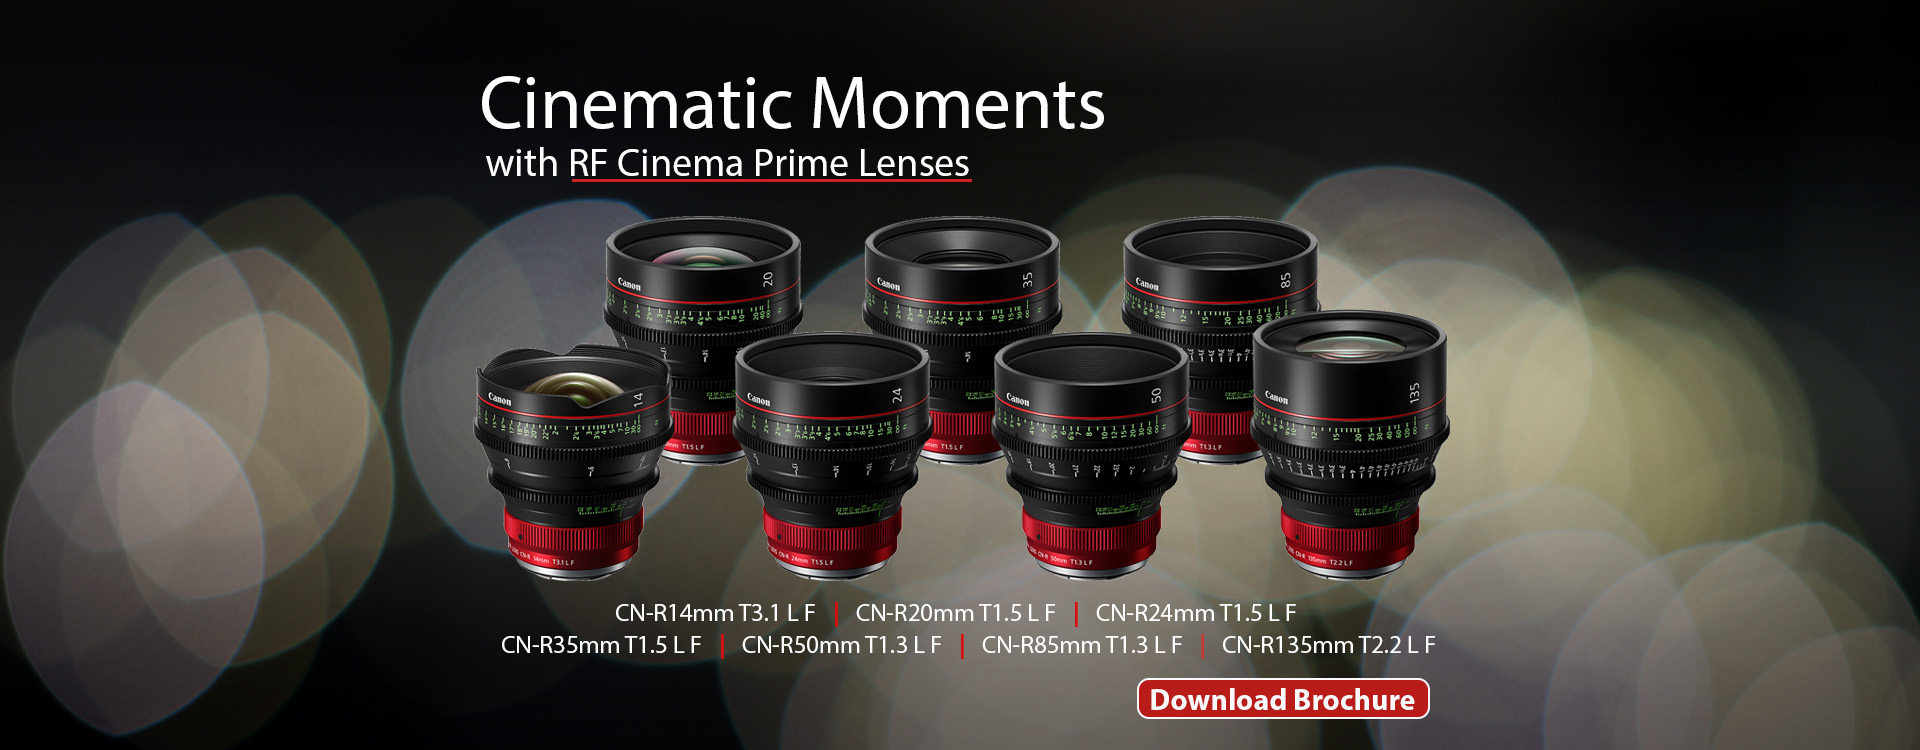 RF Cinema Lens Banner w download button_RF Cinema Lens